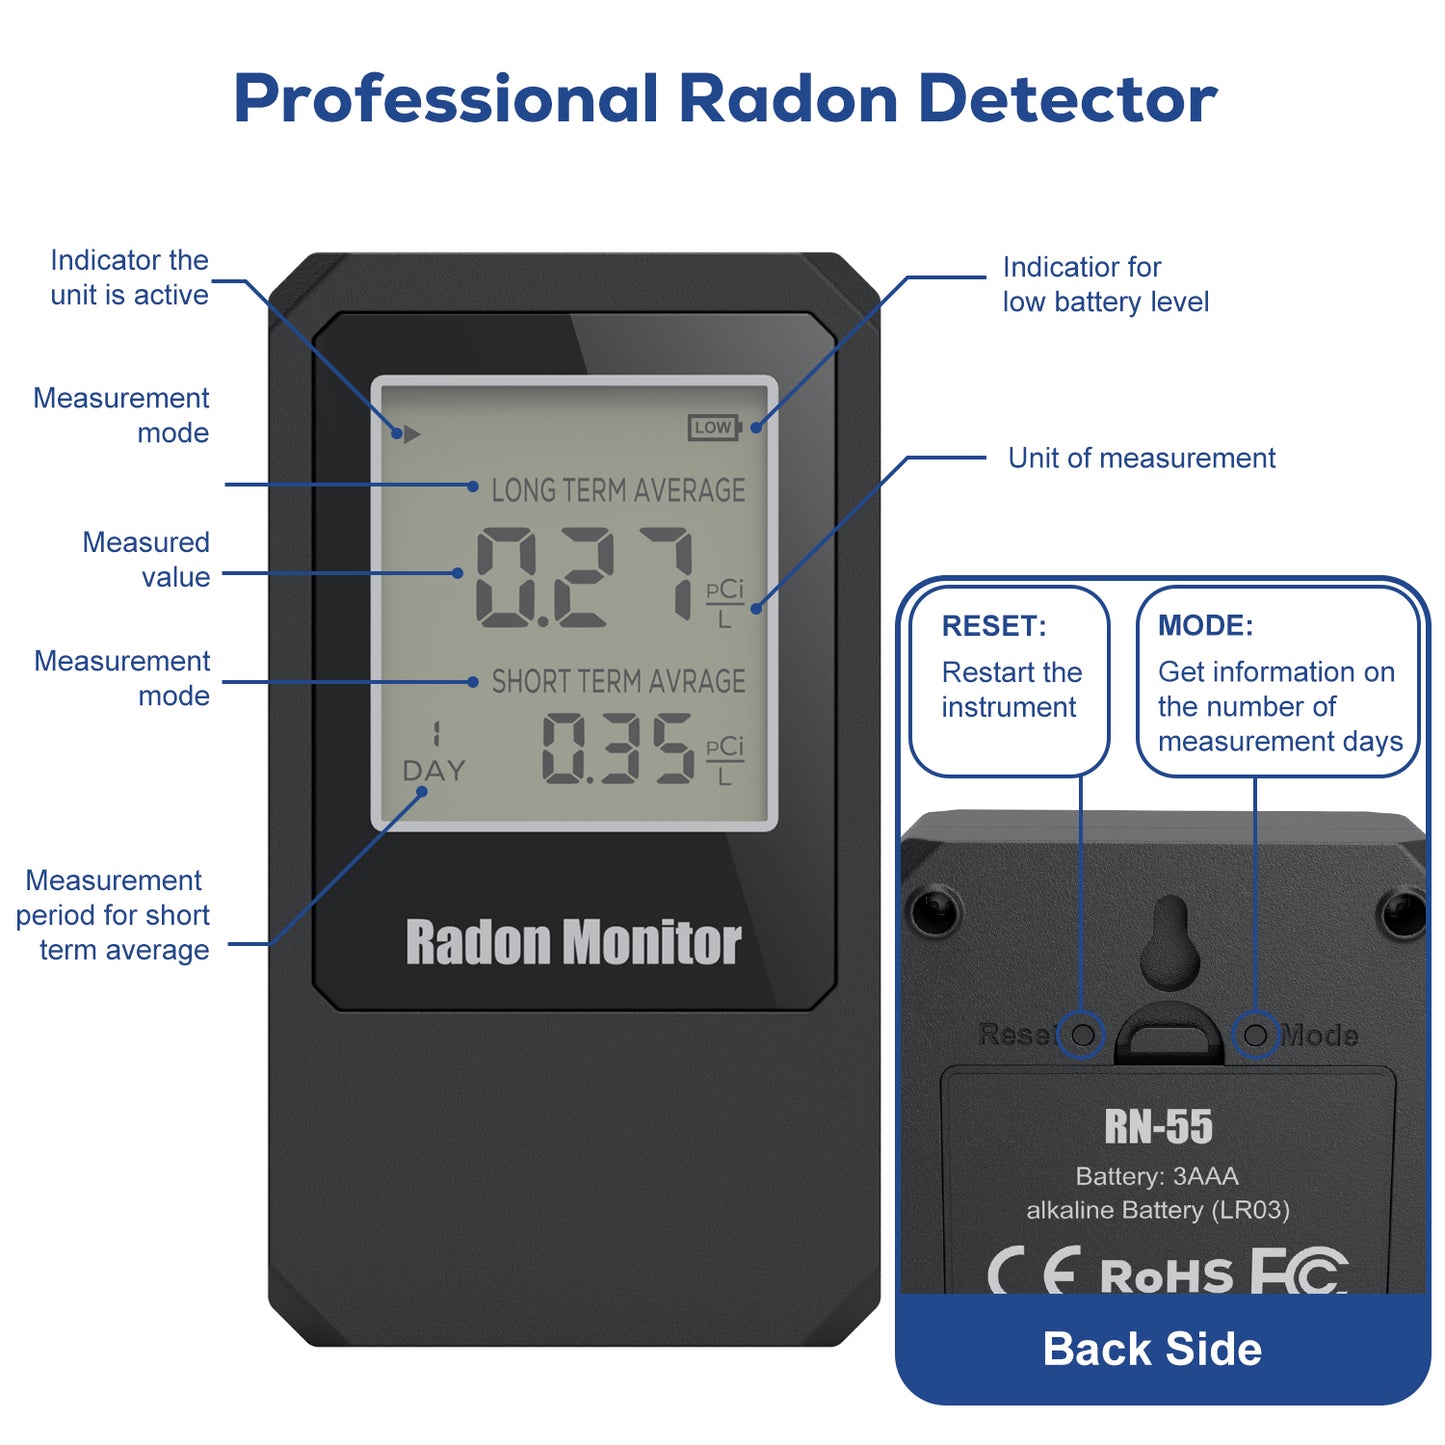 Radon Gas Detector - Radon PDS